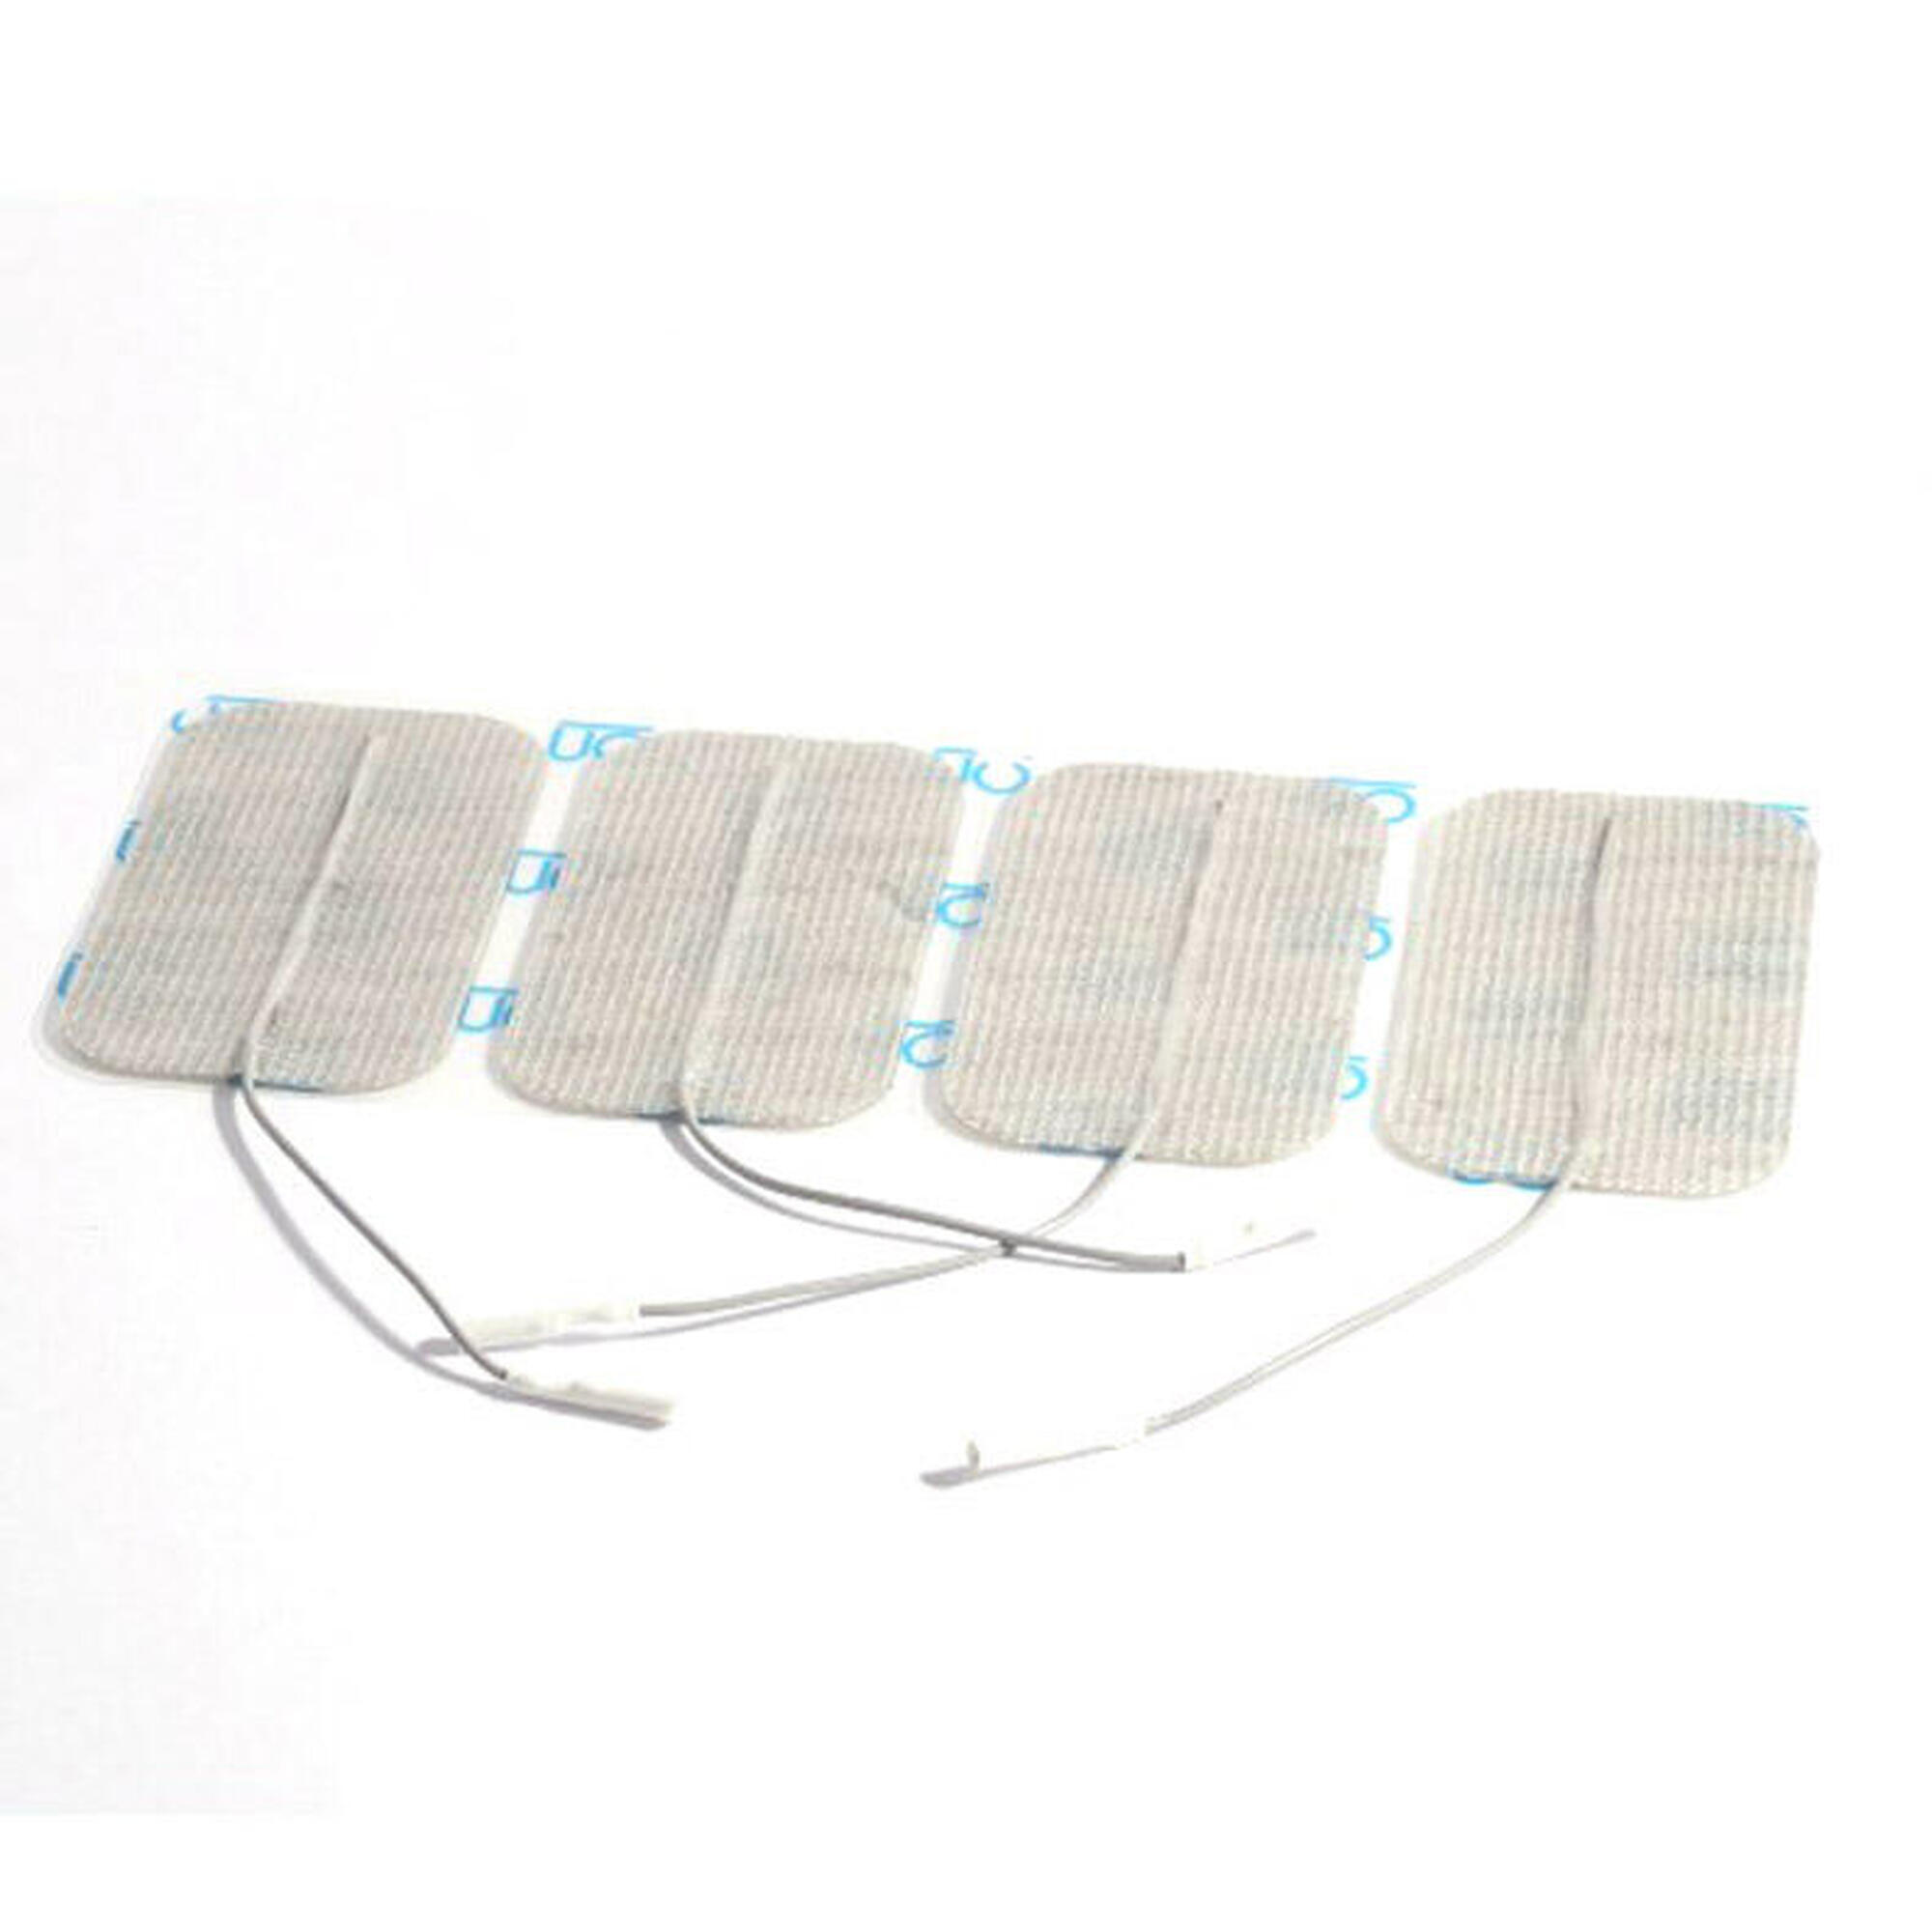 Électrodes Globus MyoTrode Platinum 50 x 90mm